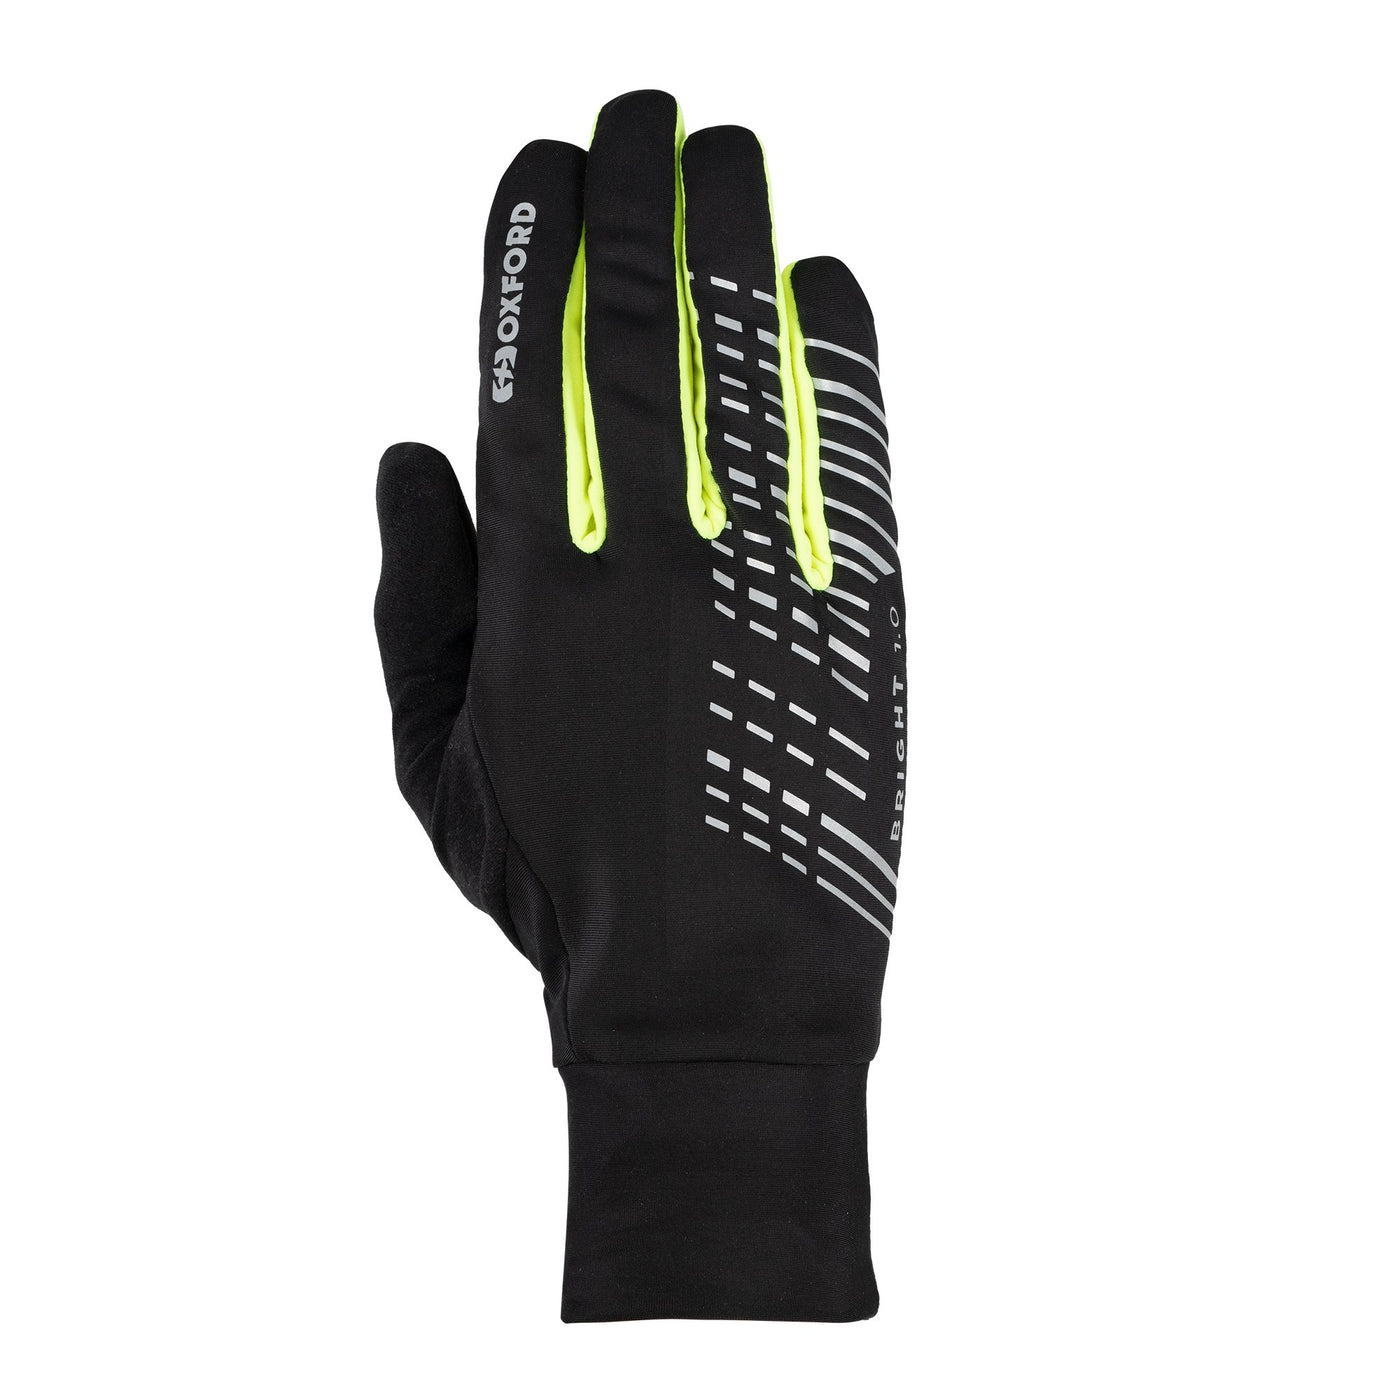 Oxford Bright Gloves 1.0